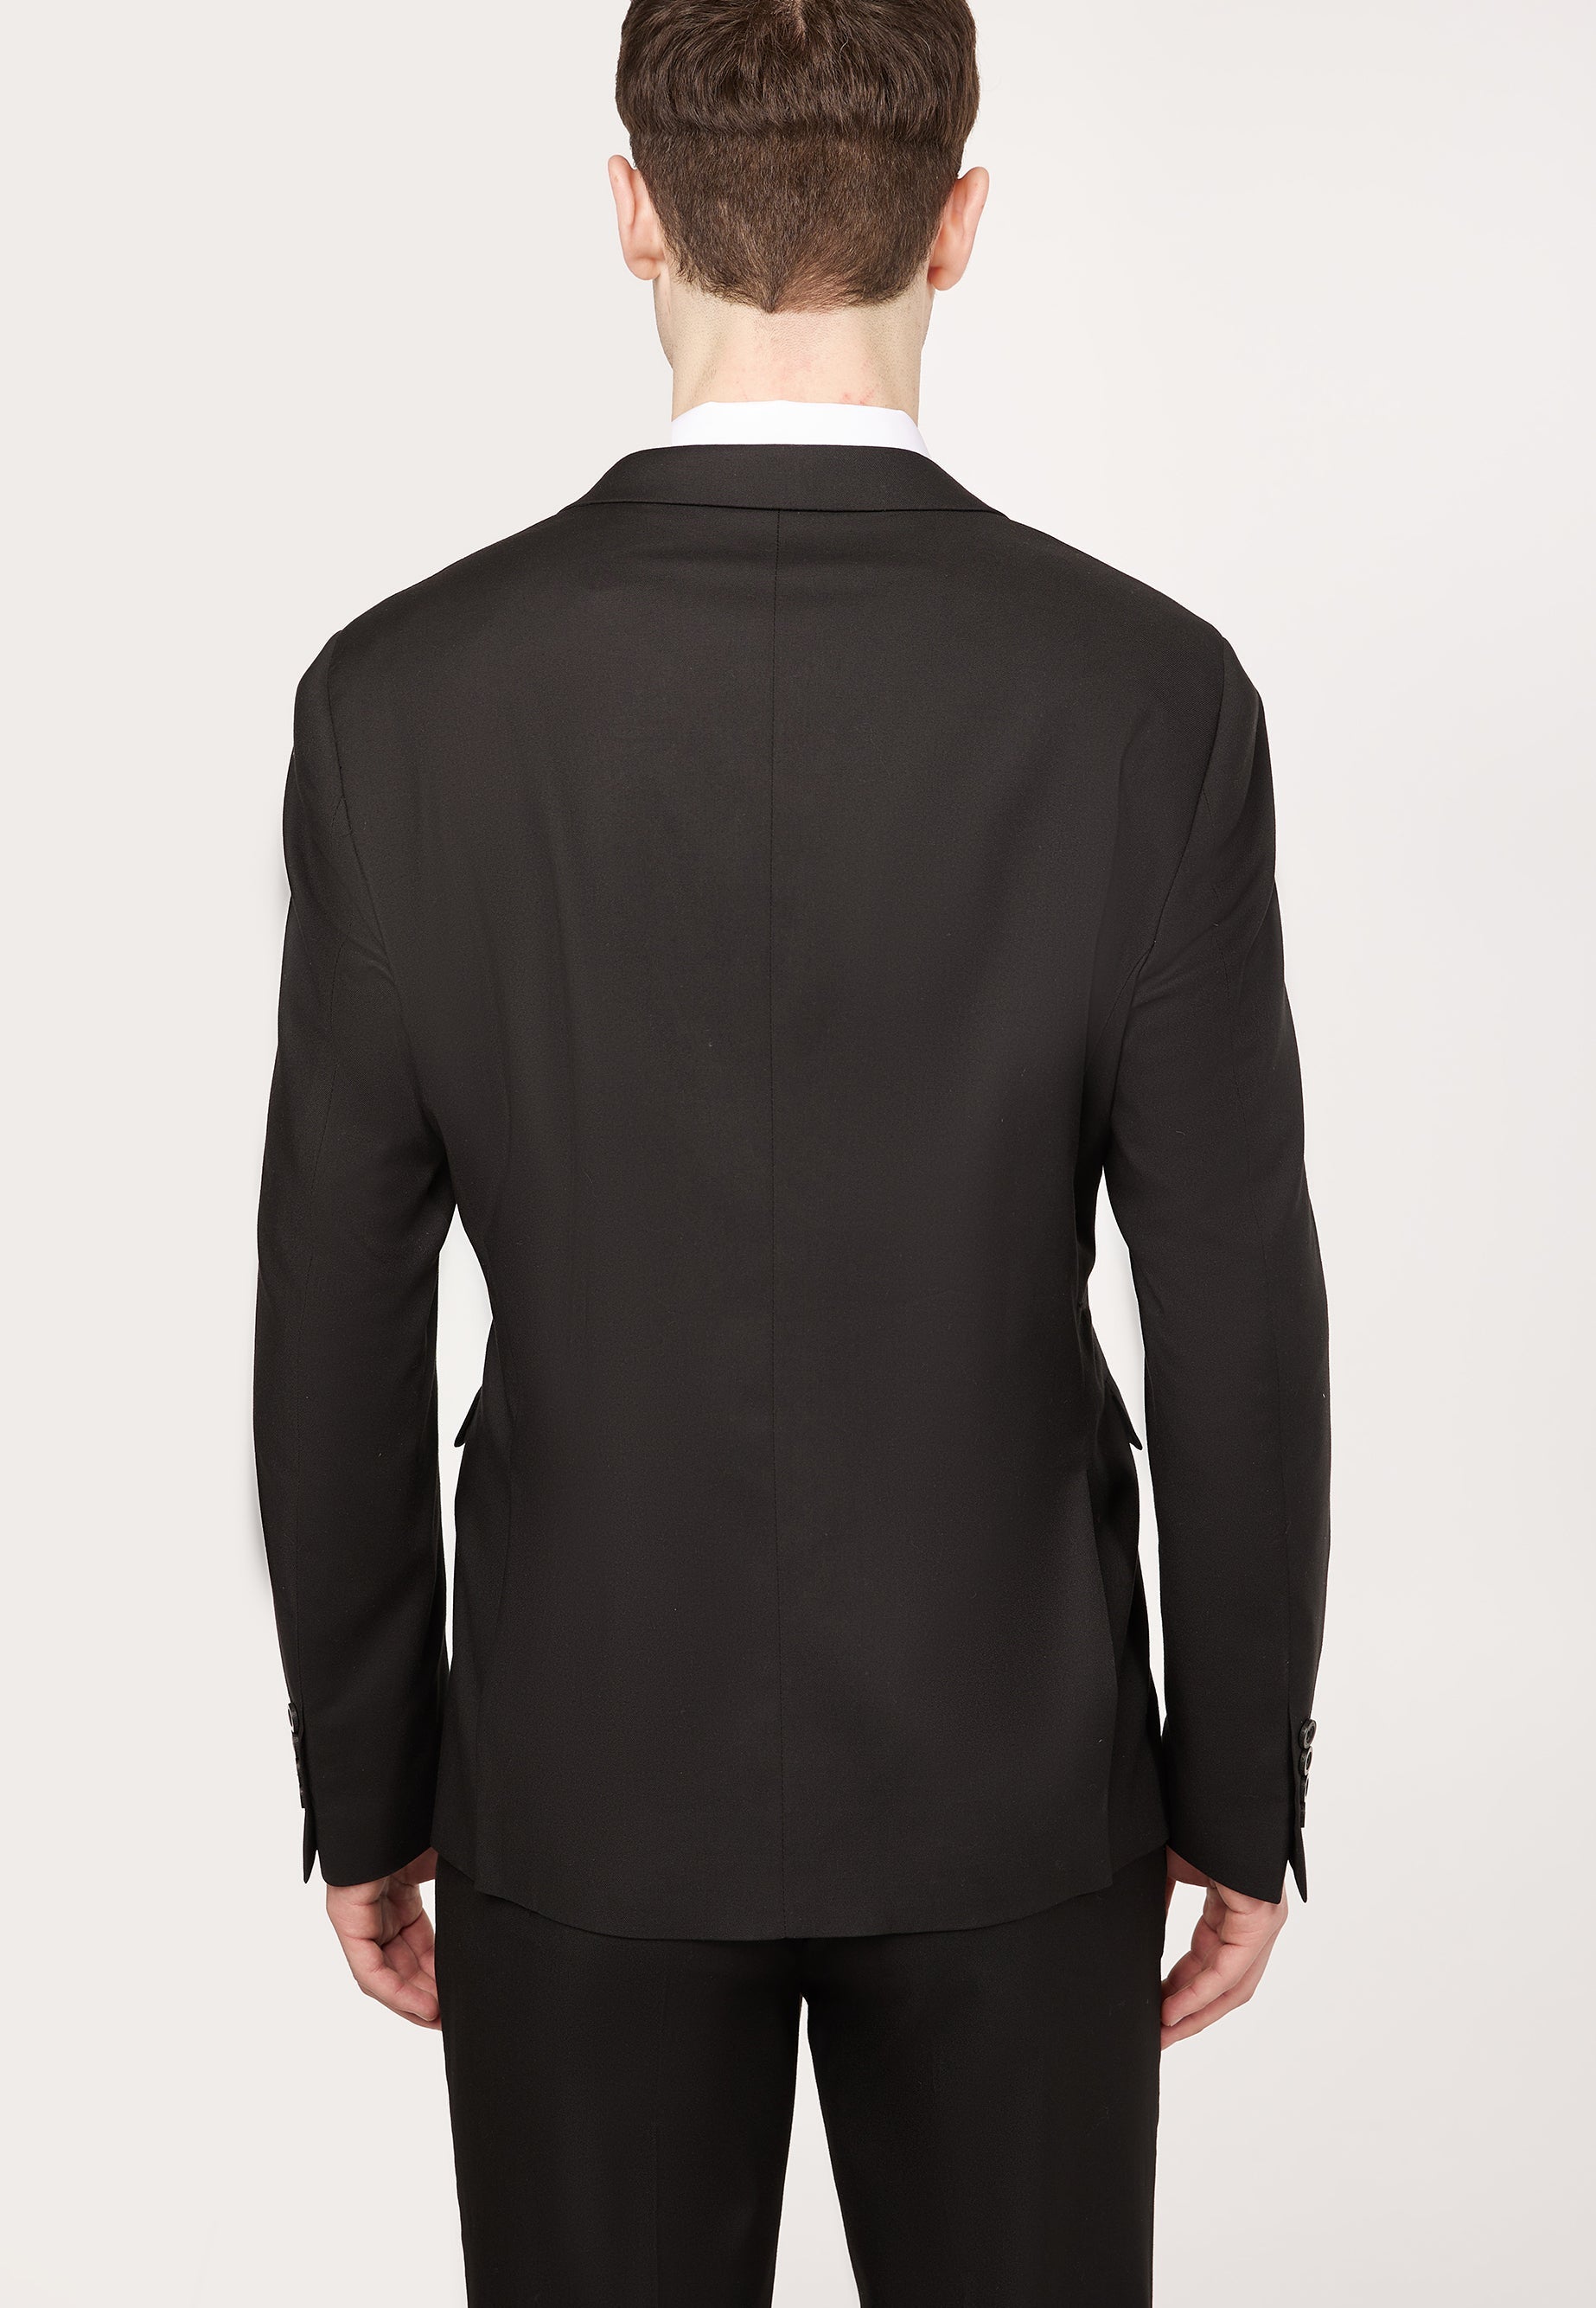 Plain black jacket semi-tailored cut